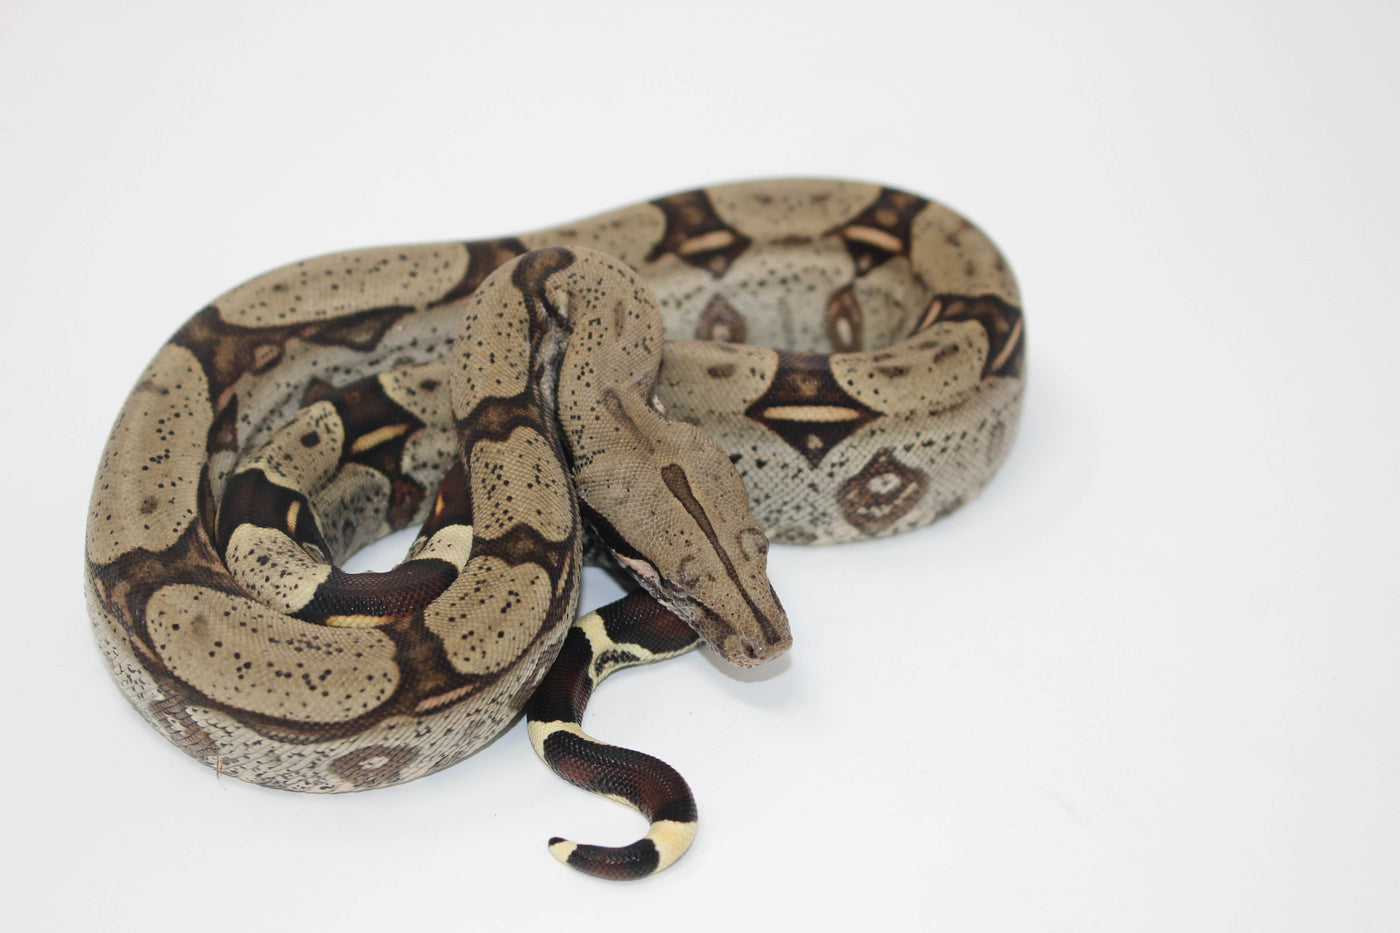 peruvian boa constrictor for sale, buy reptiles online